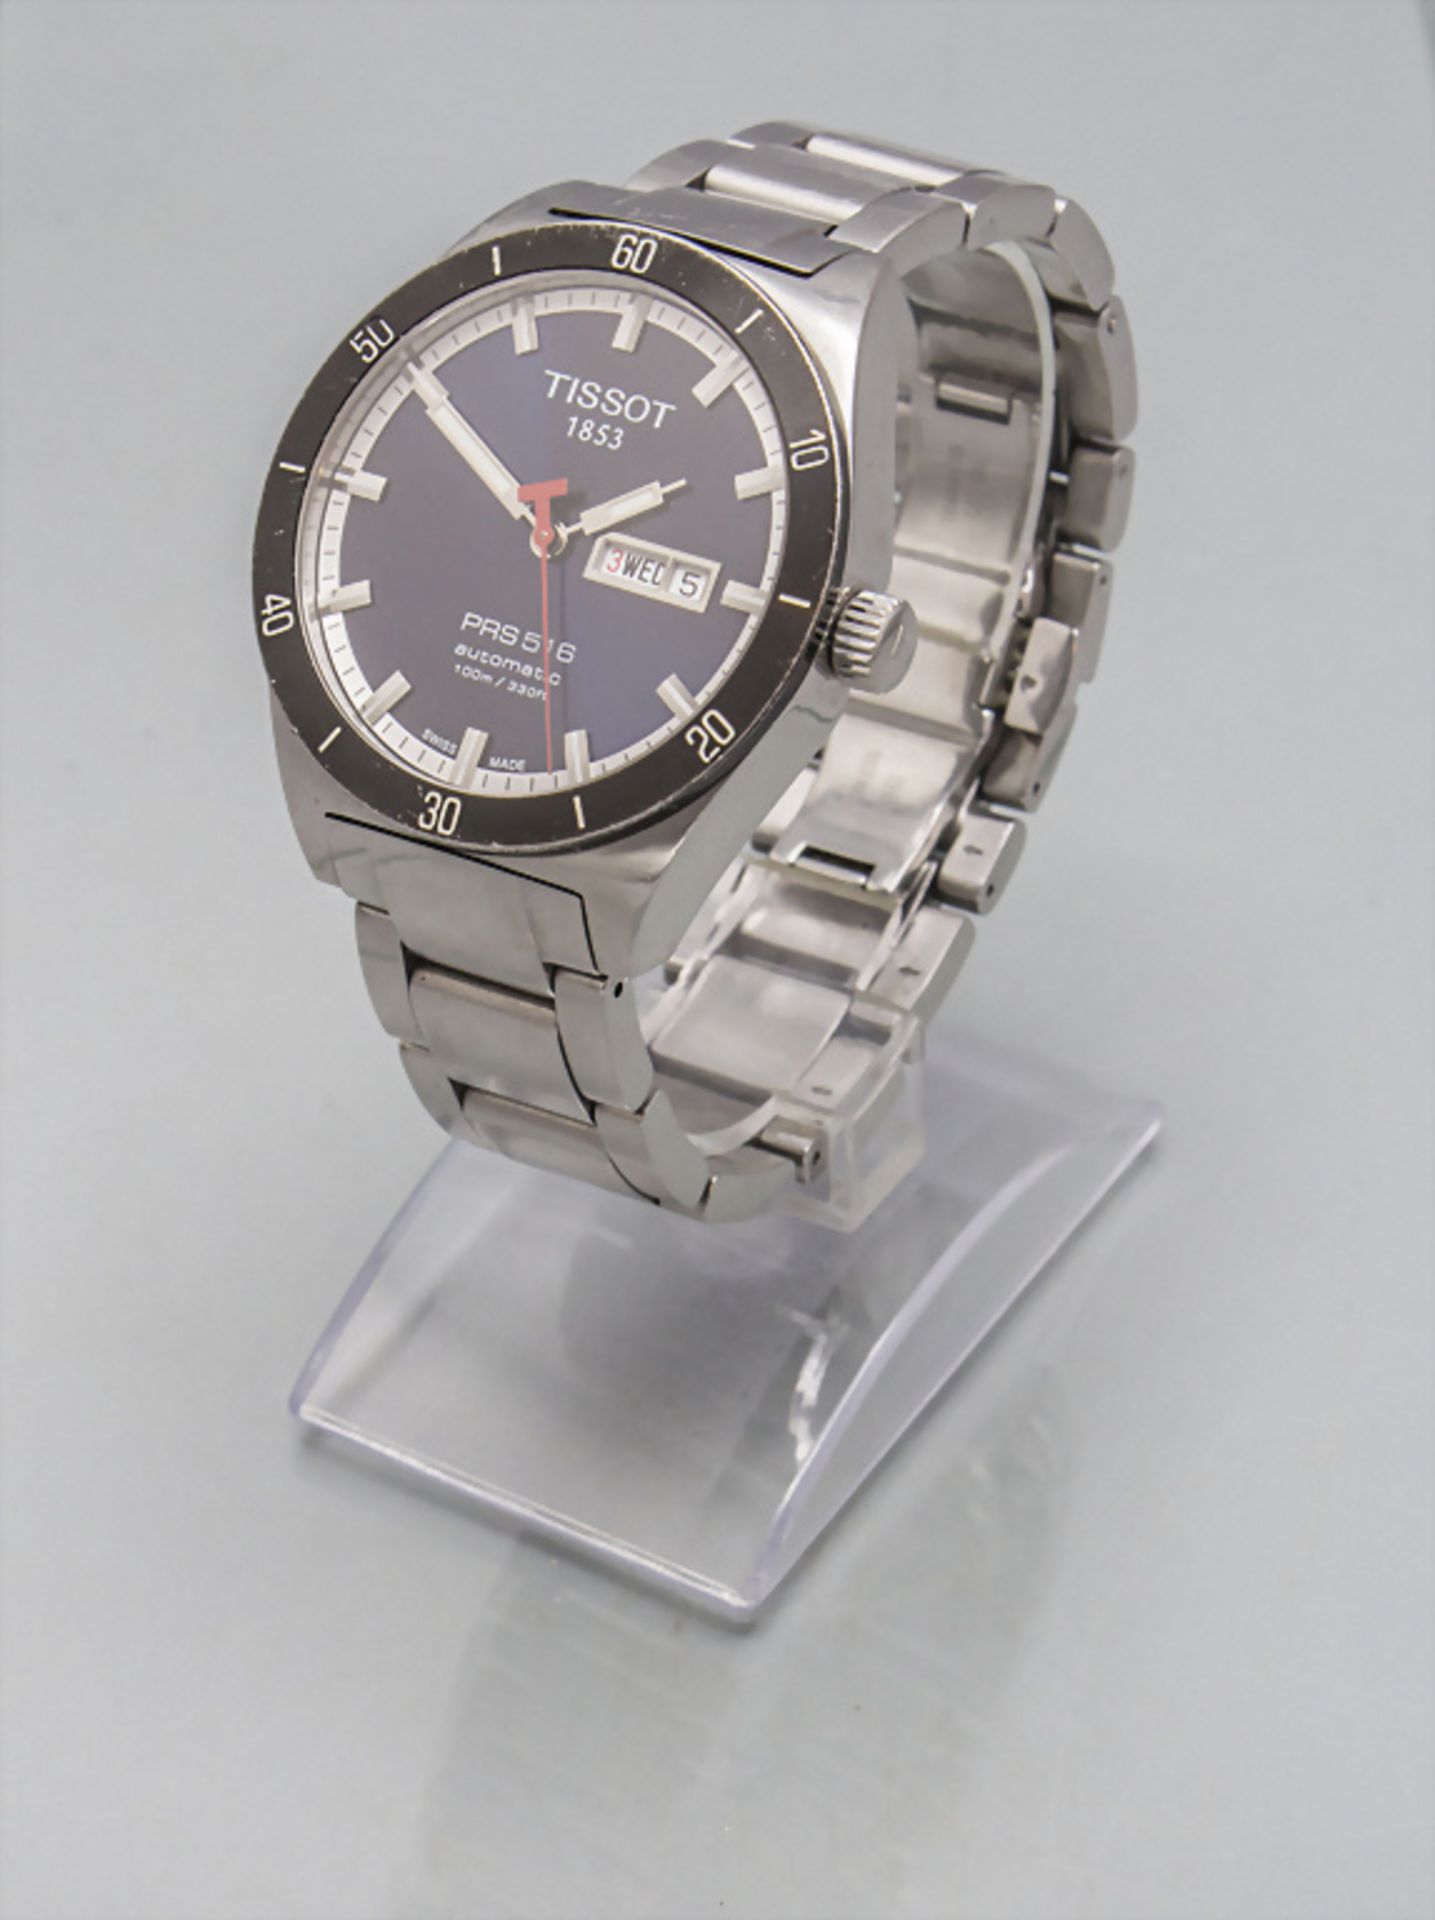 HAU Tissot PRS 516 Automatik / A men's wristwatch, Schweiz / Swiss, um 2000 - Image 2 of 7